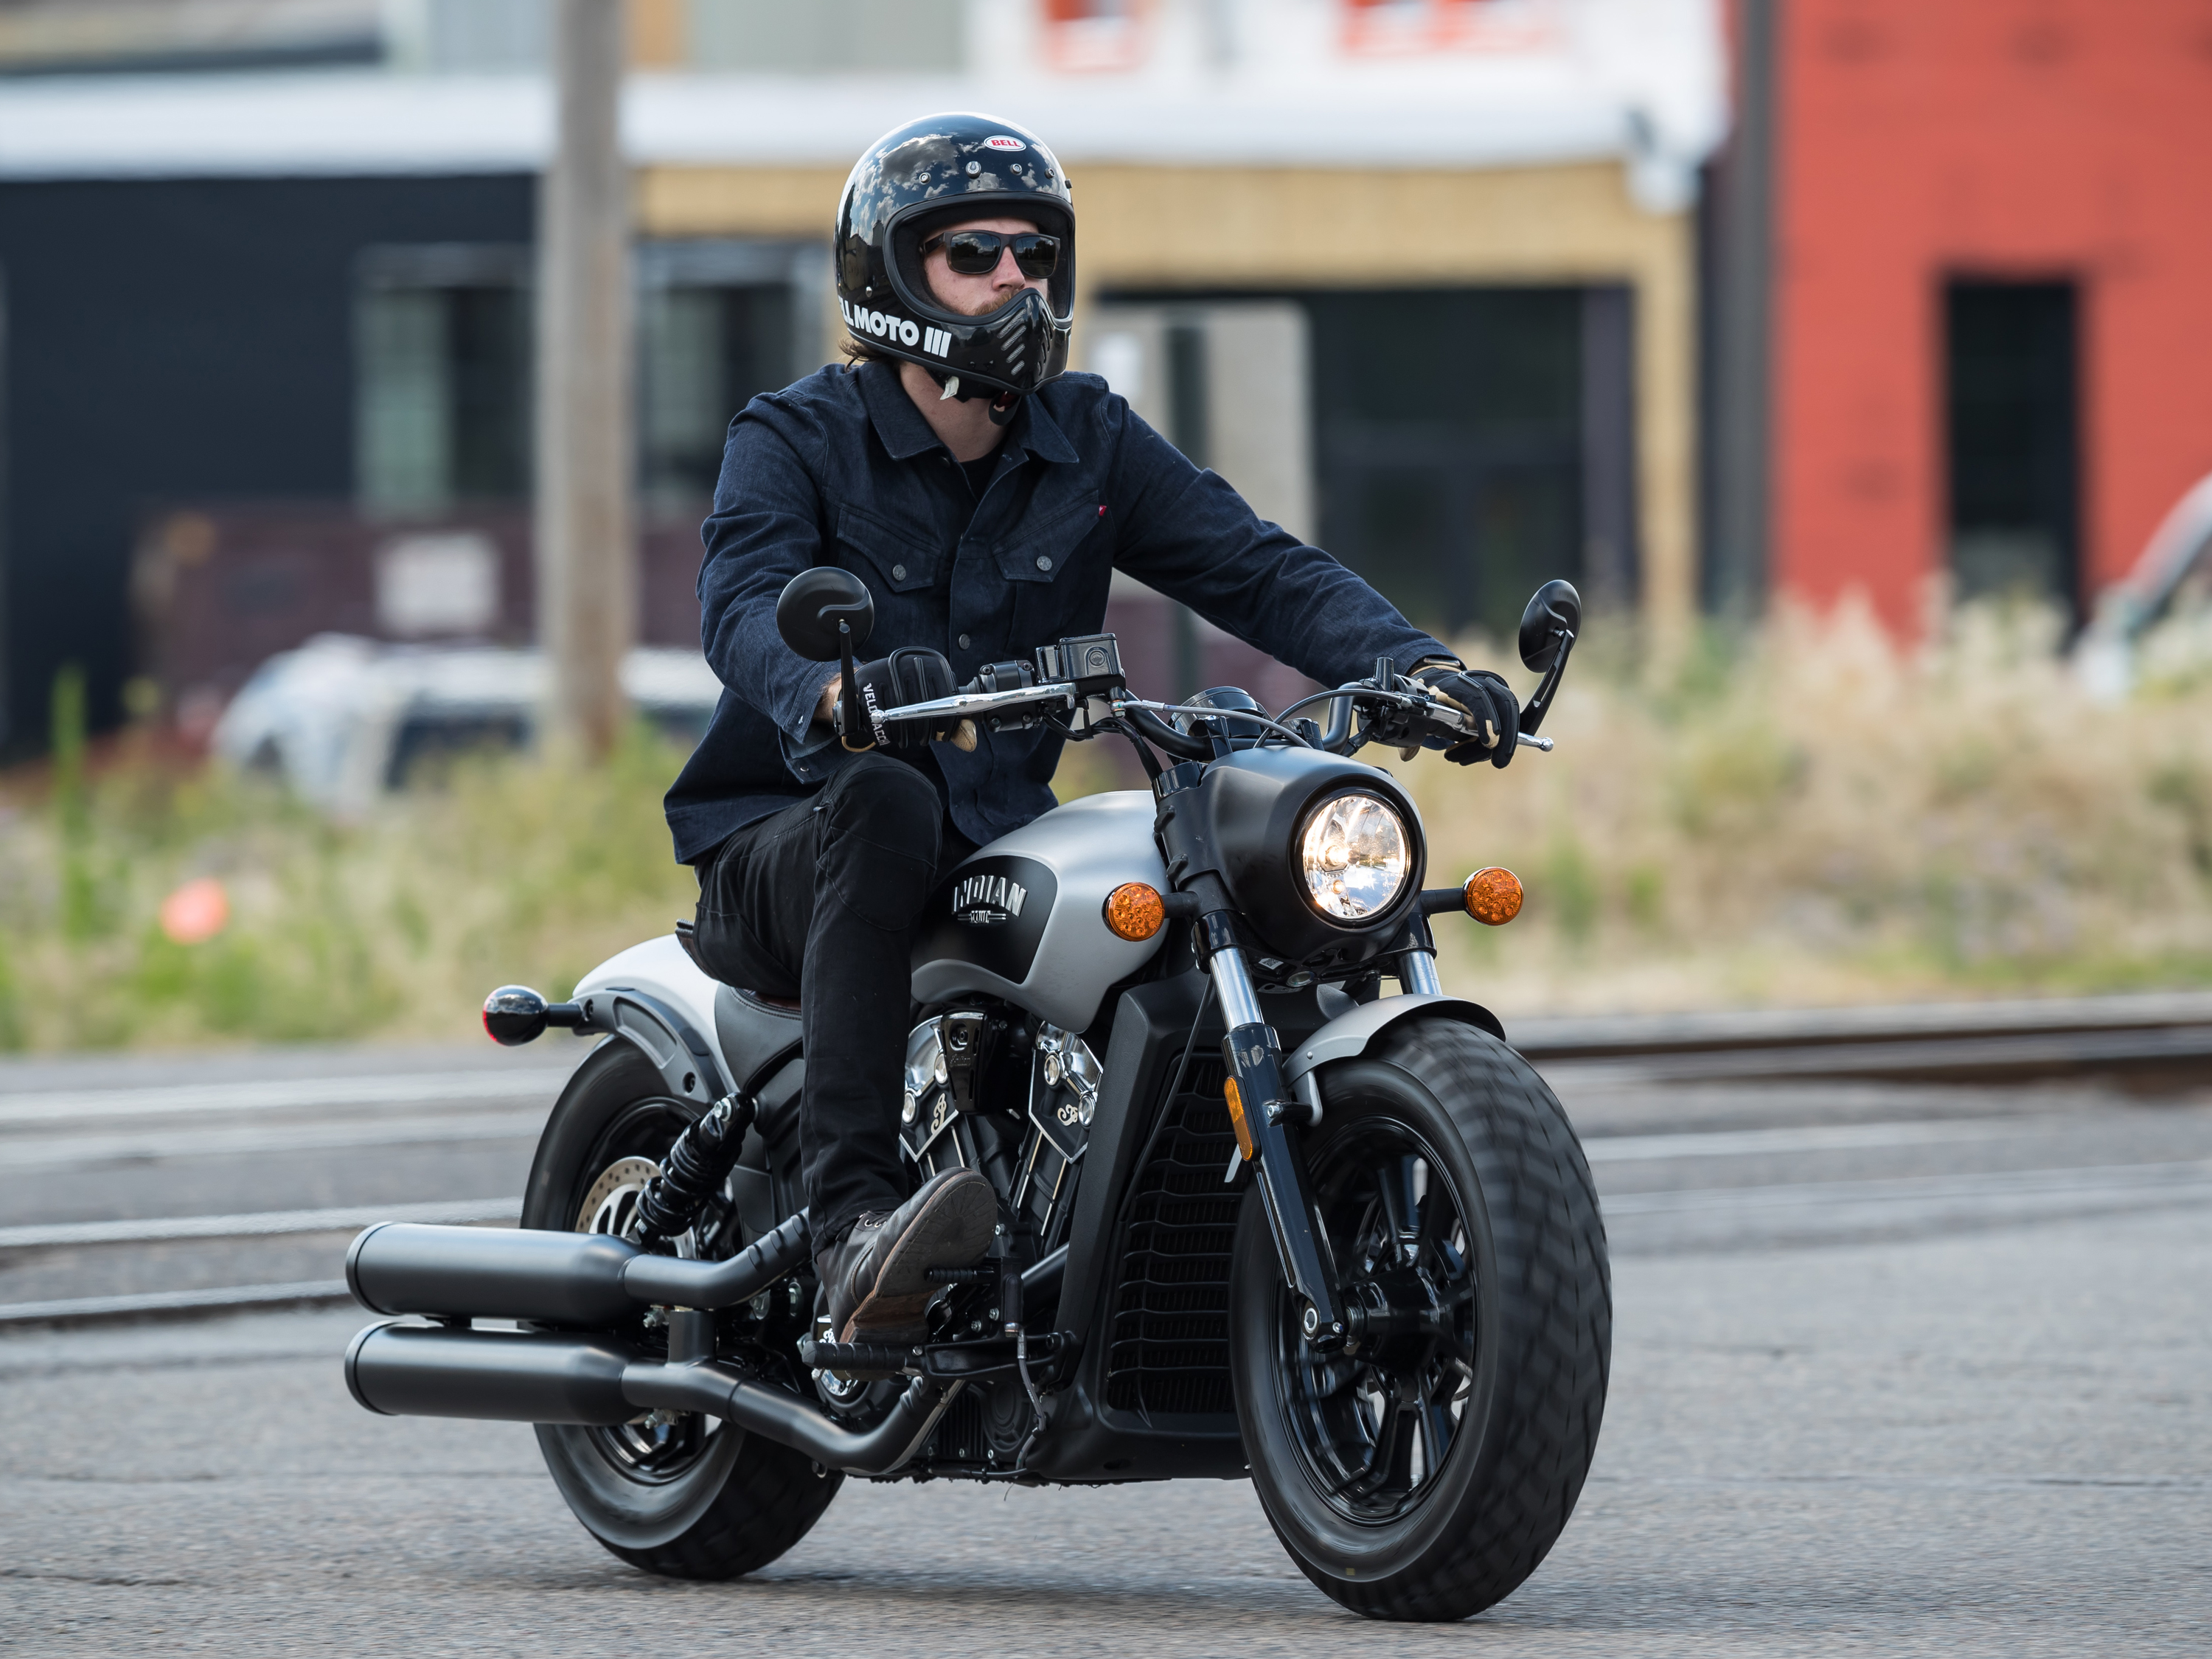 Pando Moto Capo Rider Jacket Review